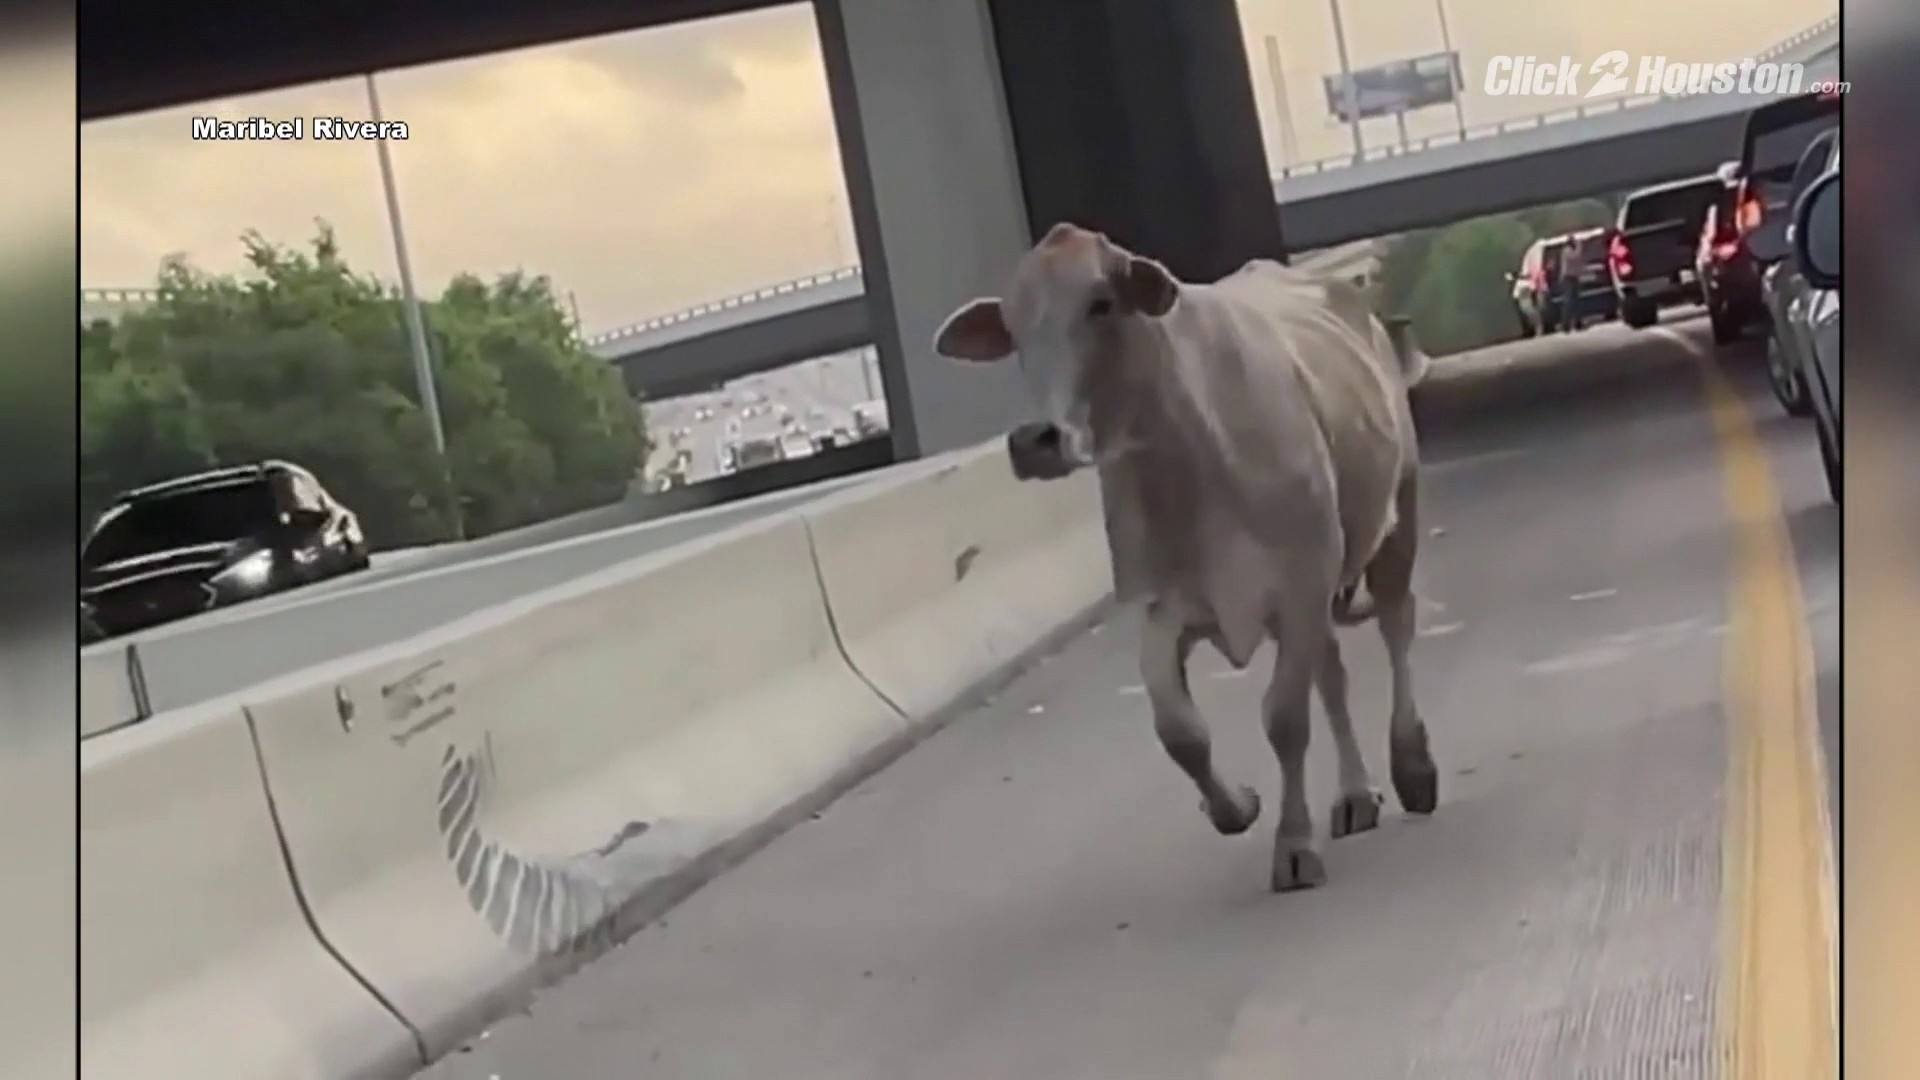 Alligator, cow delay Houston traffic, turn commute into zoo